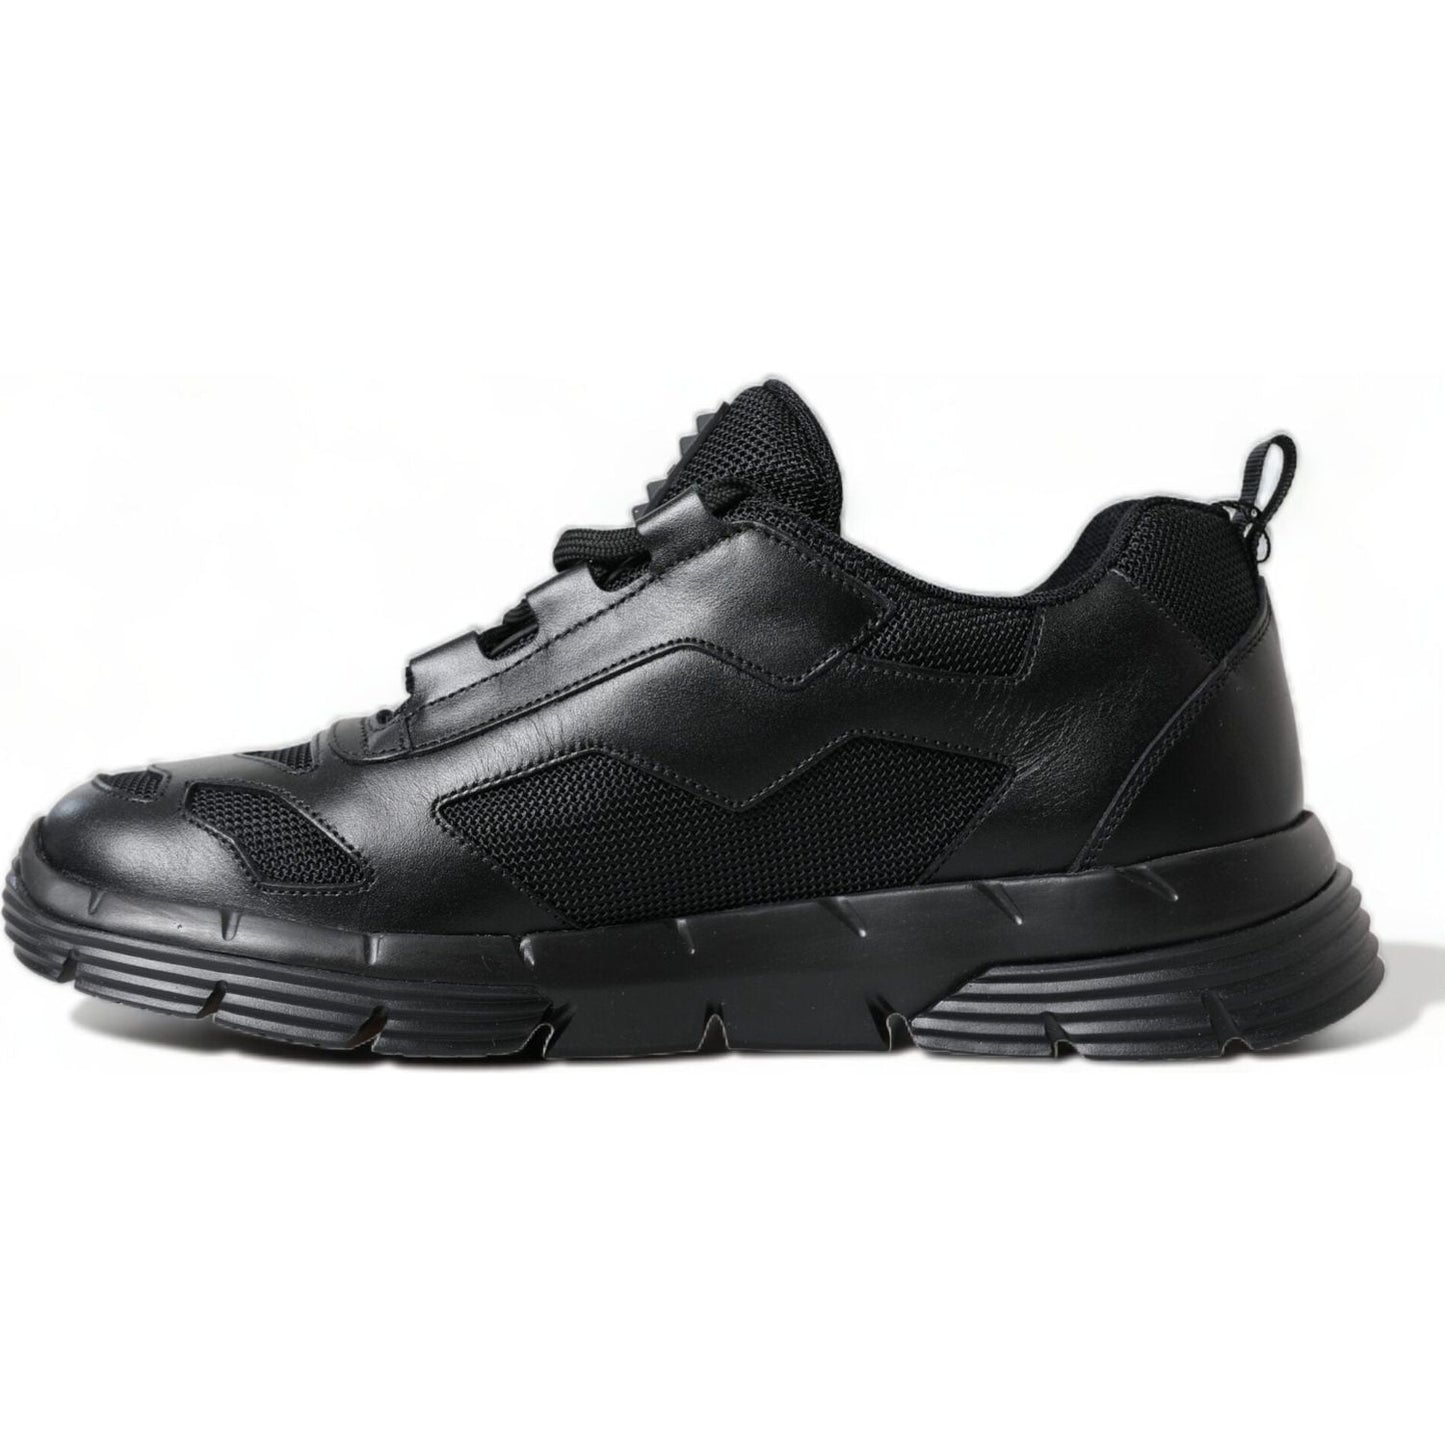 Prada Sleek Low Top Leather Sneakers in Timeless Black black-mesh-panel-low-top-twist-trainers-sneakers-shoes 465A4091-BG-scaled-78ceca2d-a14.jpg